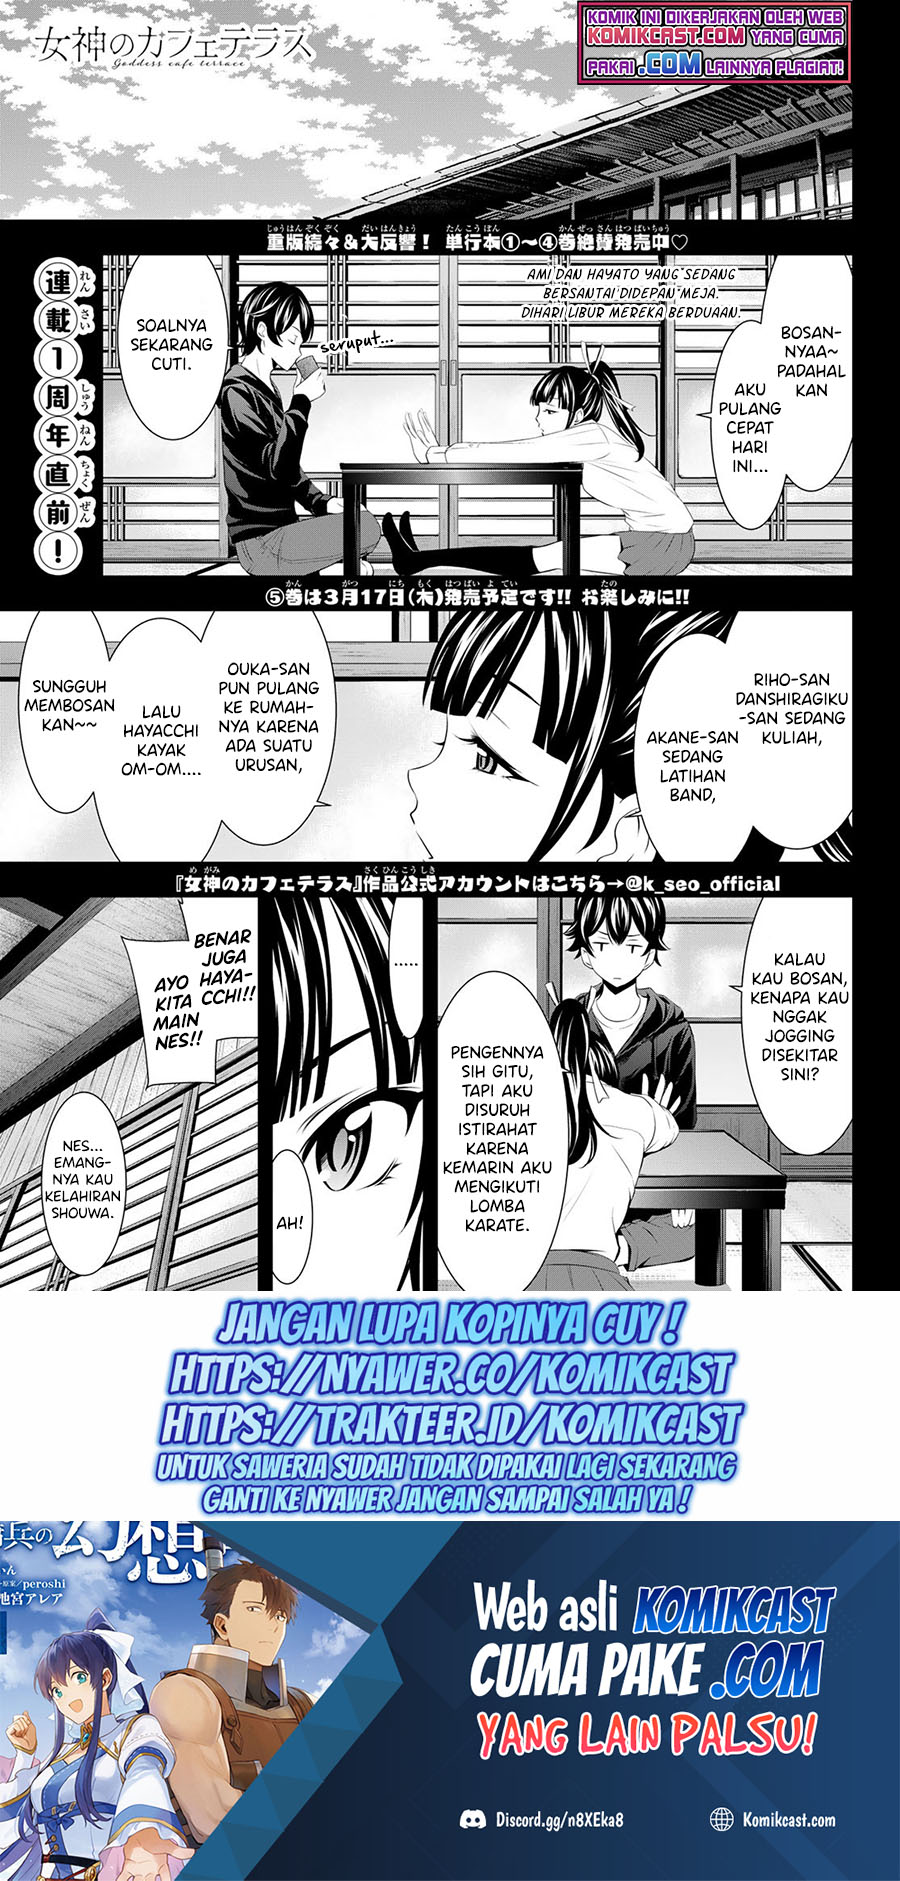 Megami no Kafeterasu (Goddess Café Terrace) Chapter 47